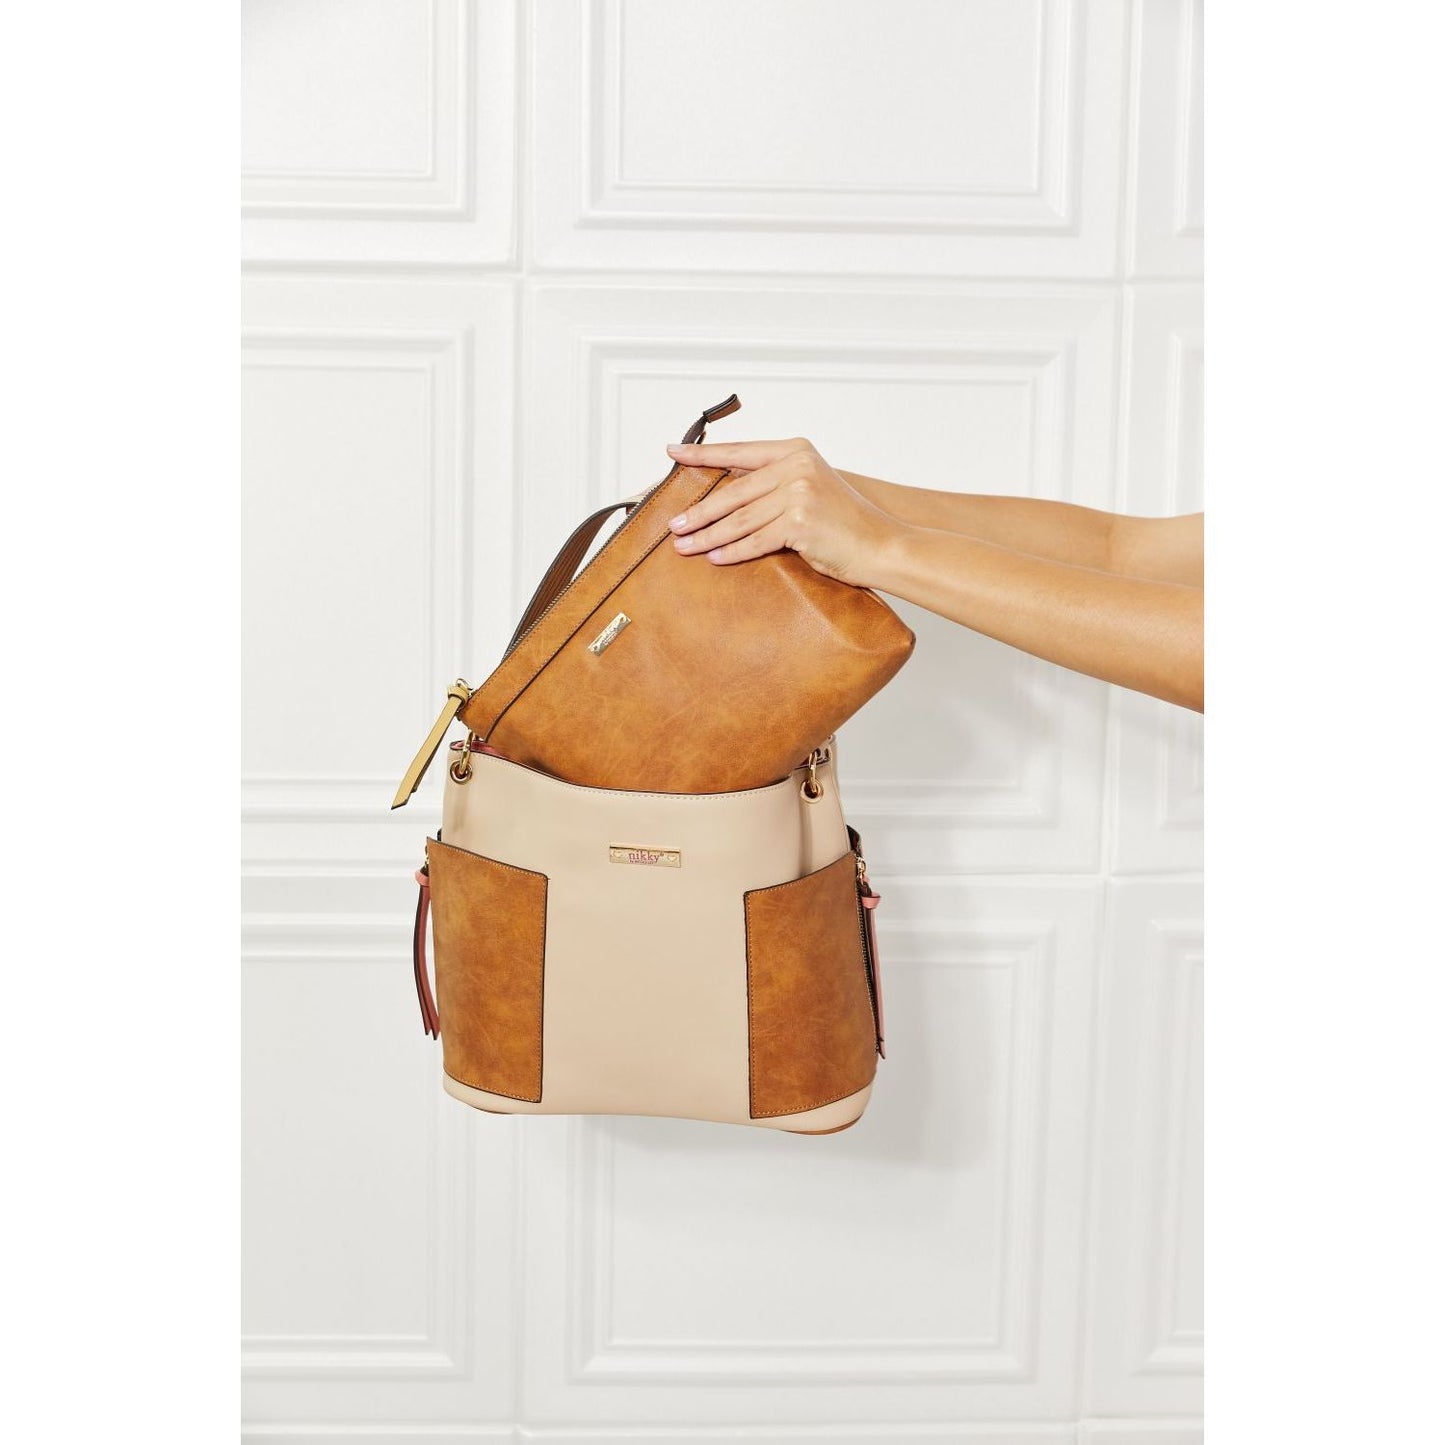 Nicole Lee USA Sweetheart Handbag Set - TiffanyzKlozet